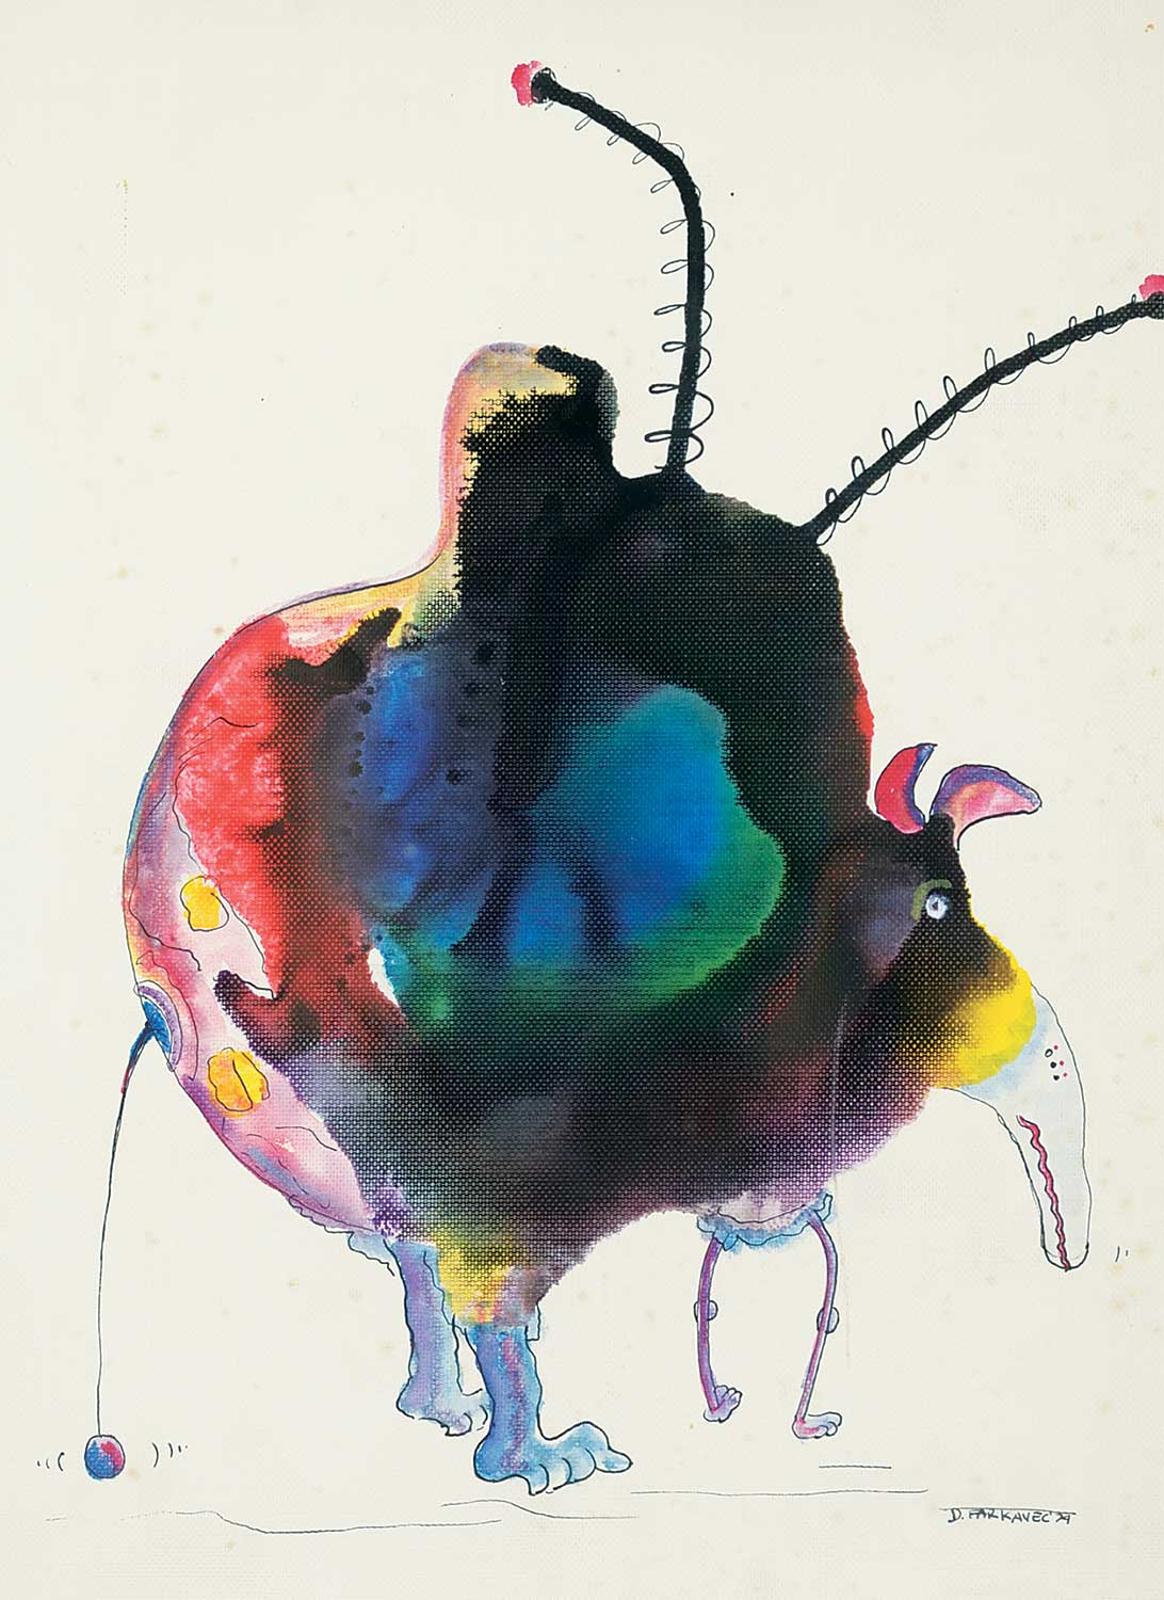 Dimitrij Farkavec - Untitled - Colourful Creature